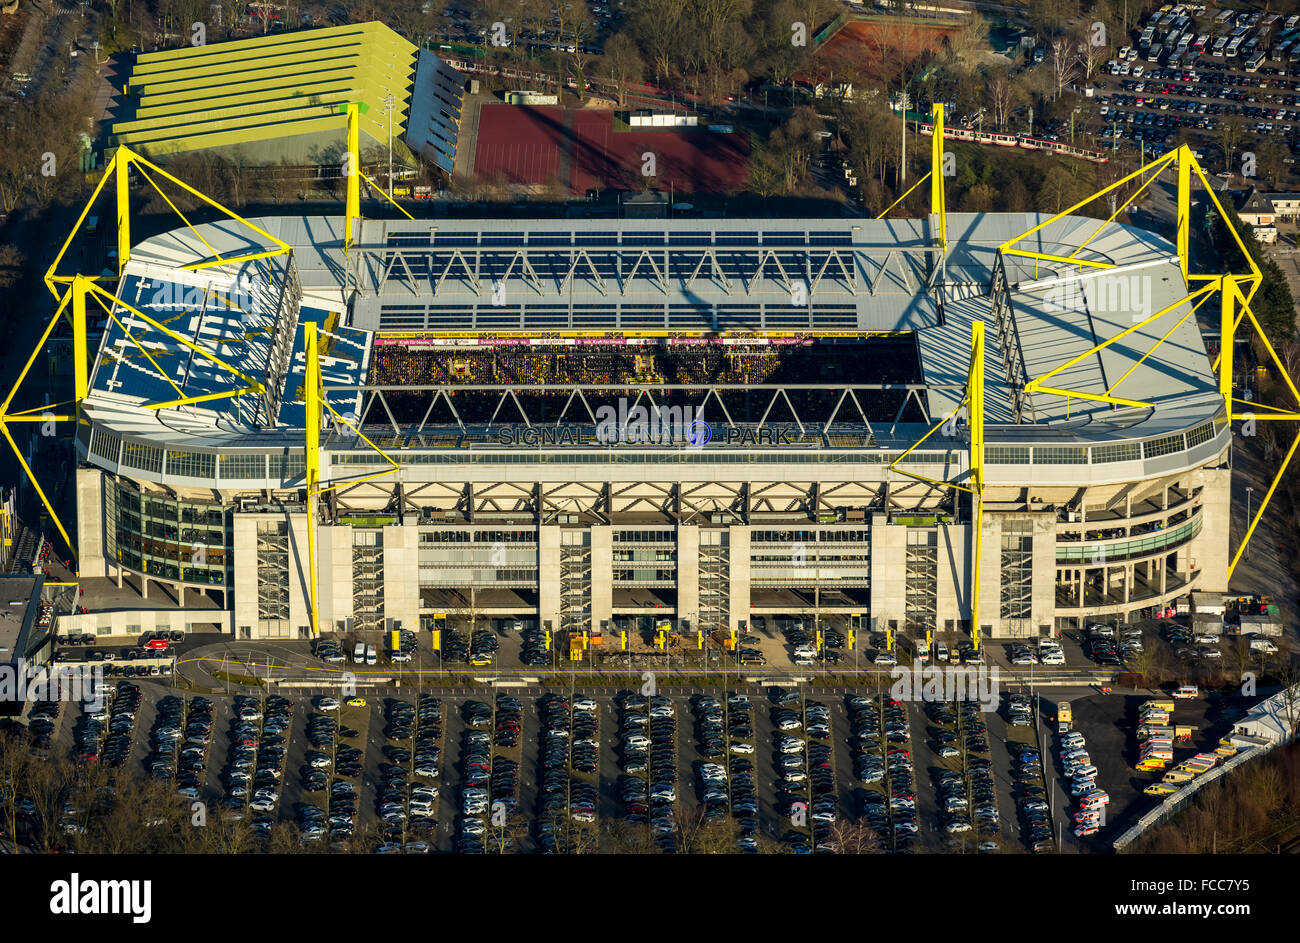 Aerial view, Signal Iduna Park Dortmund, Westfalenstadion Dortmund, first national league, football stadium, solar panels Stock Photo